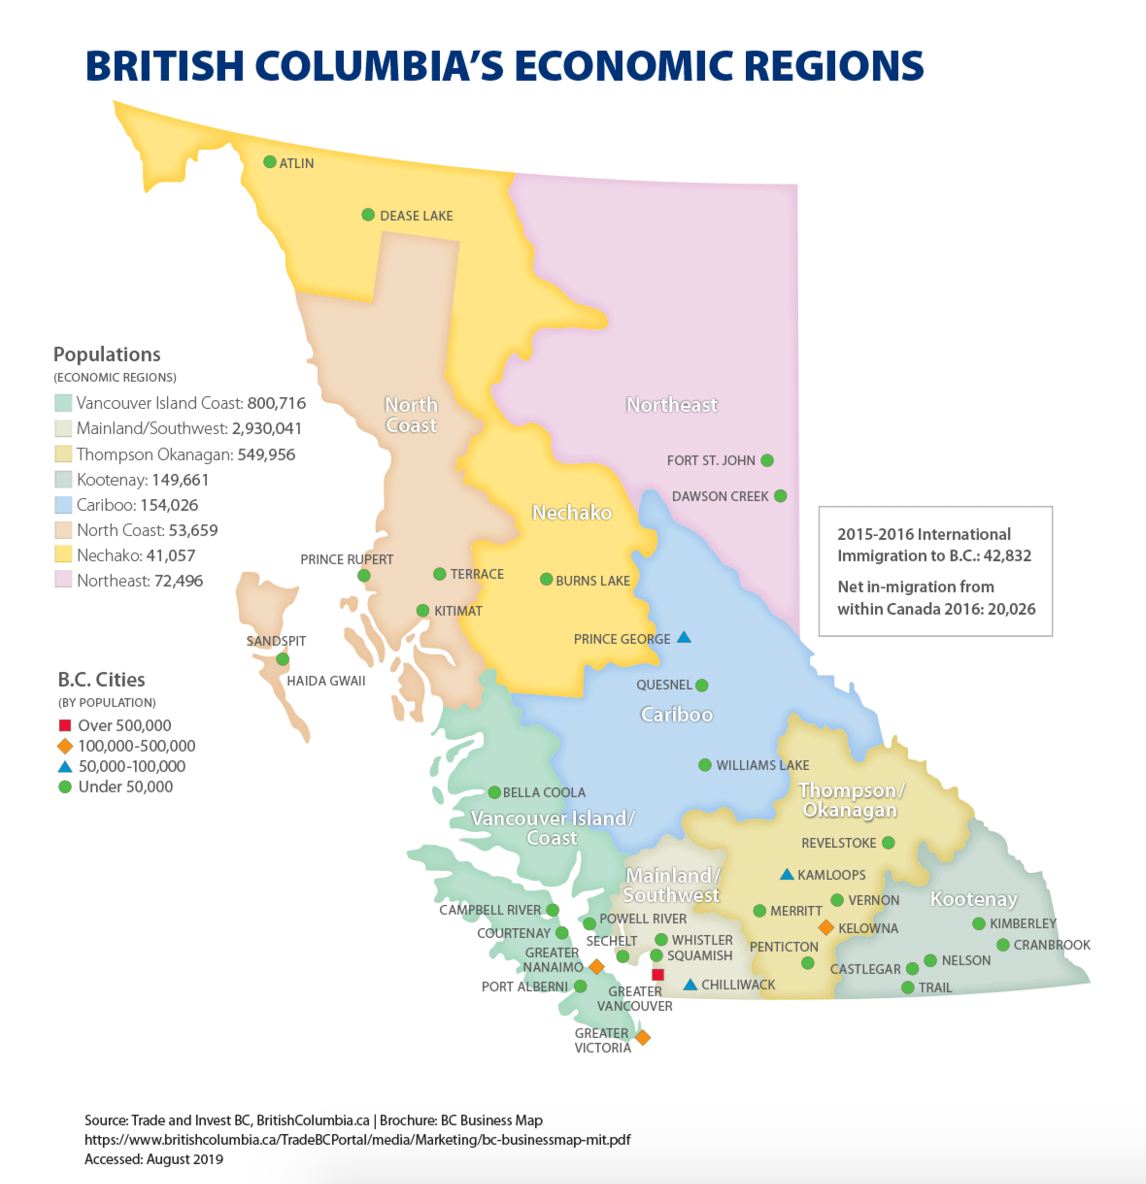 Map showing British Columbia's economic regions.